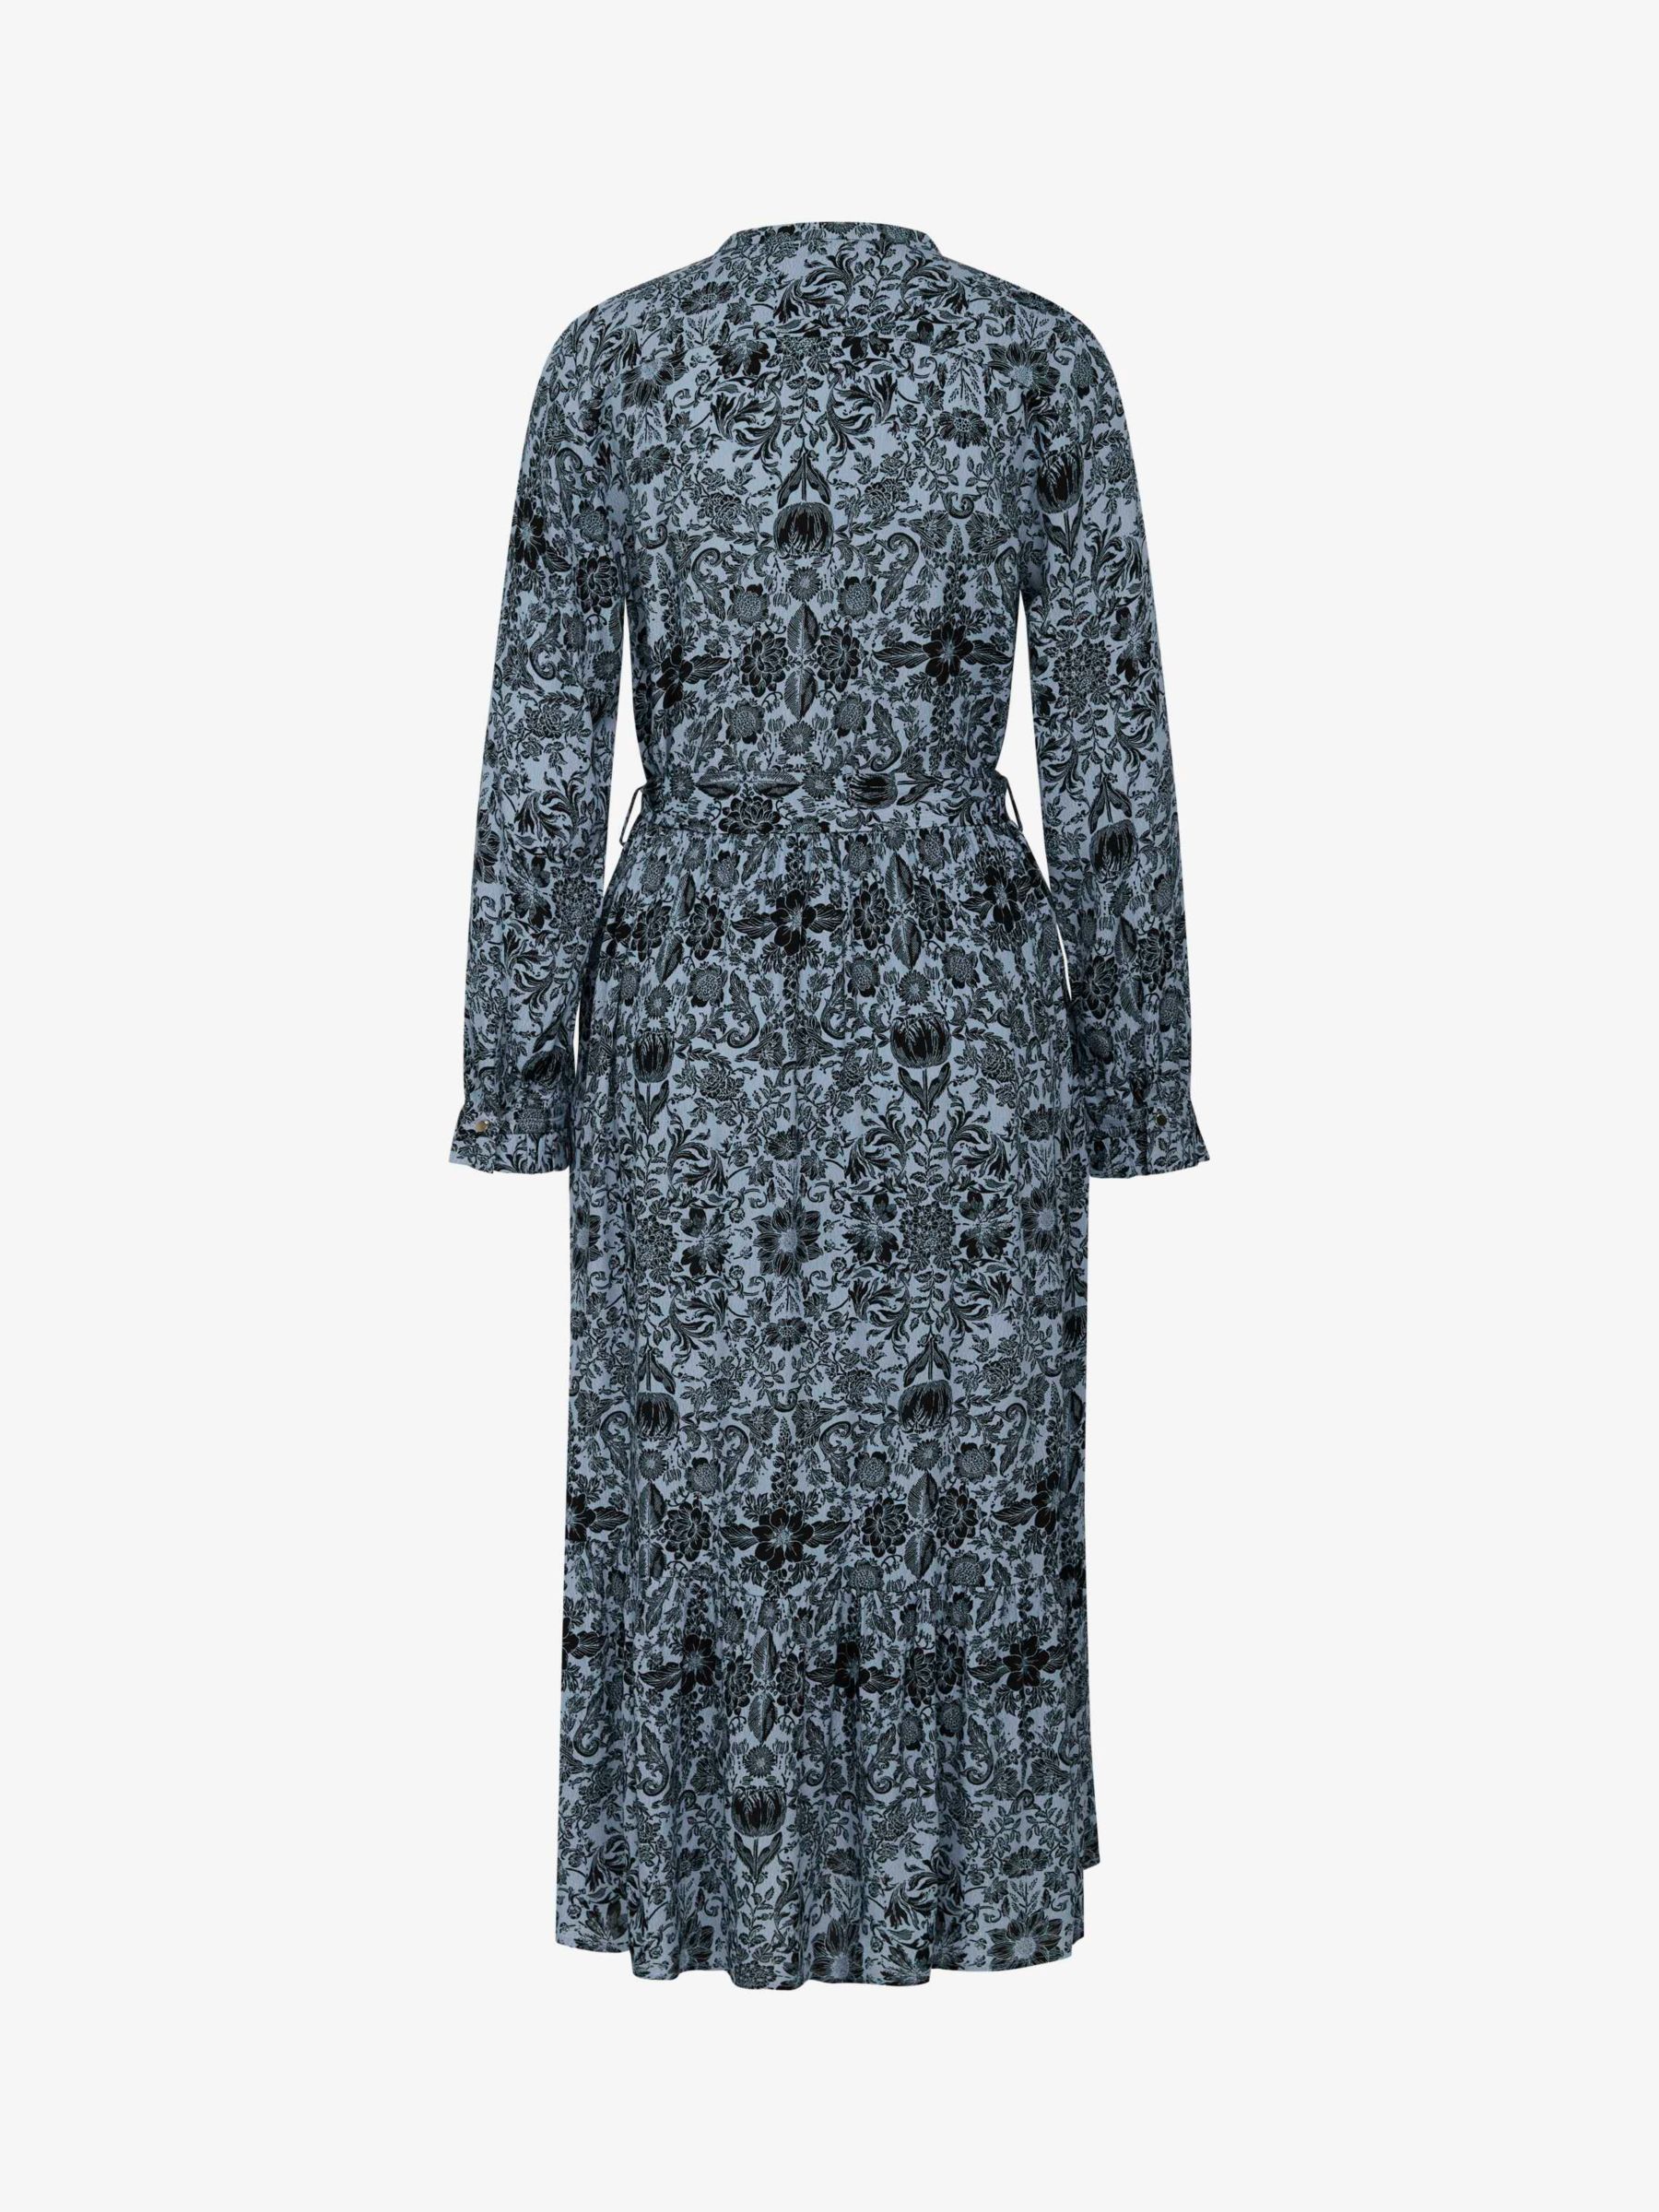 Buy Noa Noa Louise Floral Print Tiered Maxi Dress, Blue/Black Online at johnlewis.com